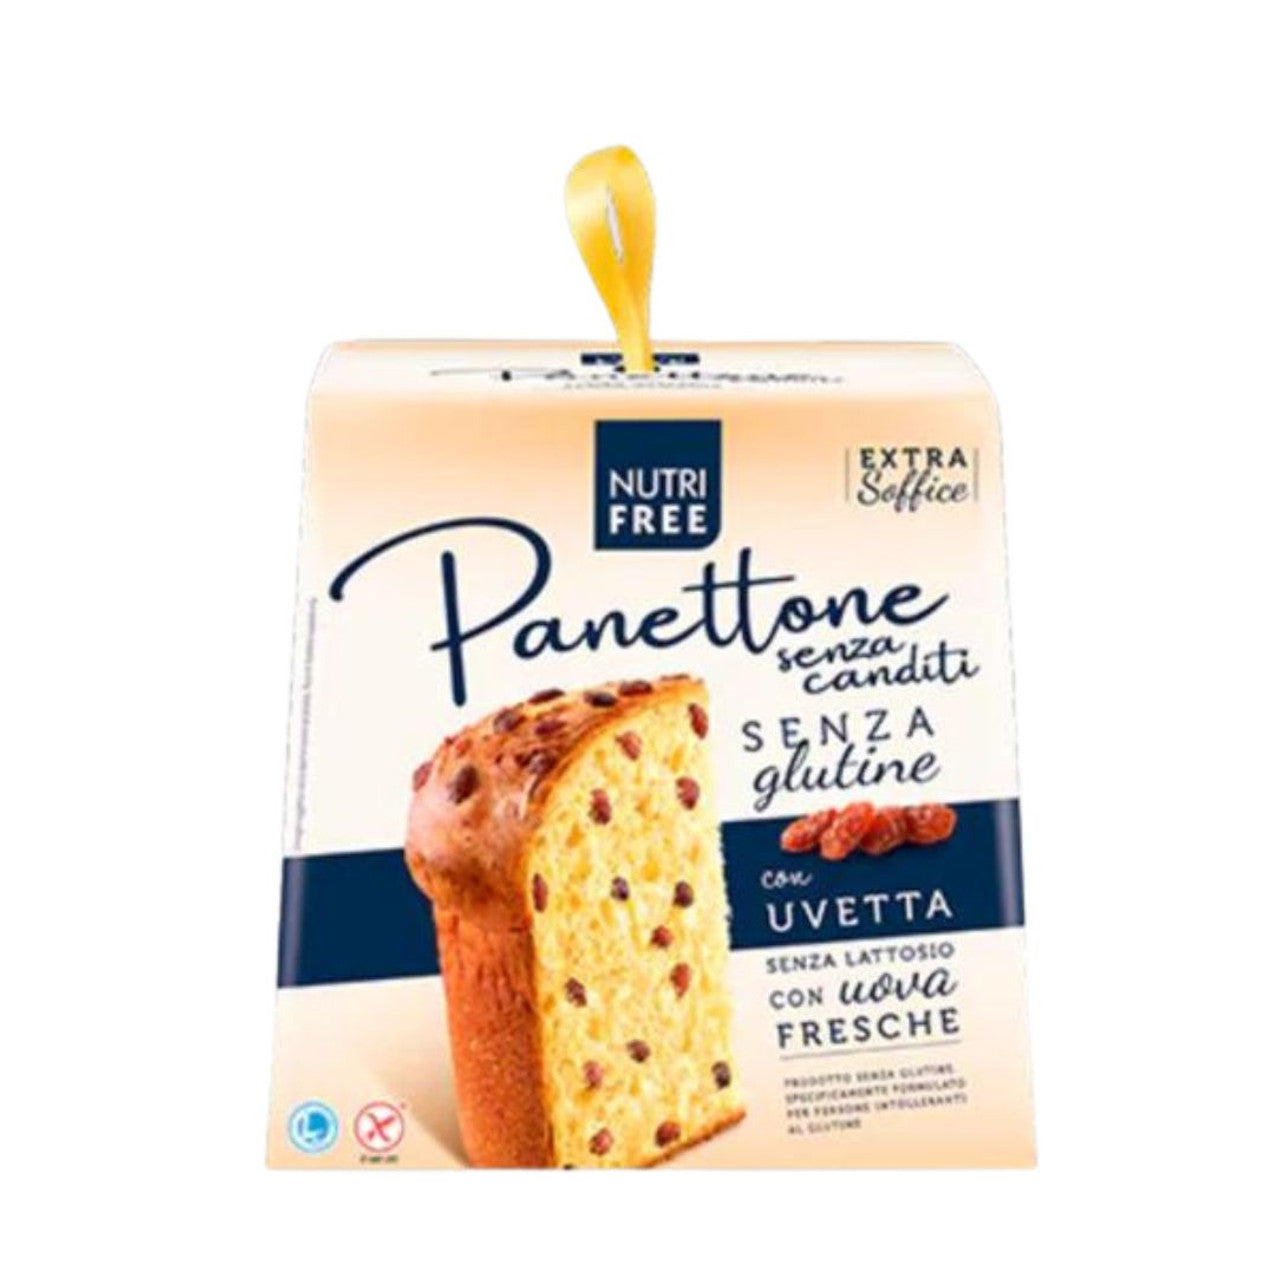 NutriFree Gluten Free Classic Panettone